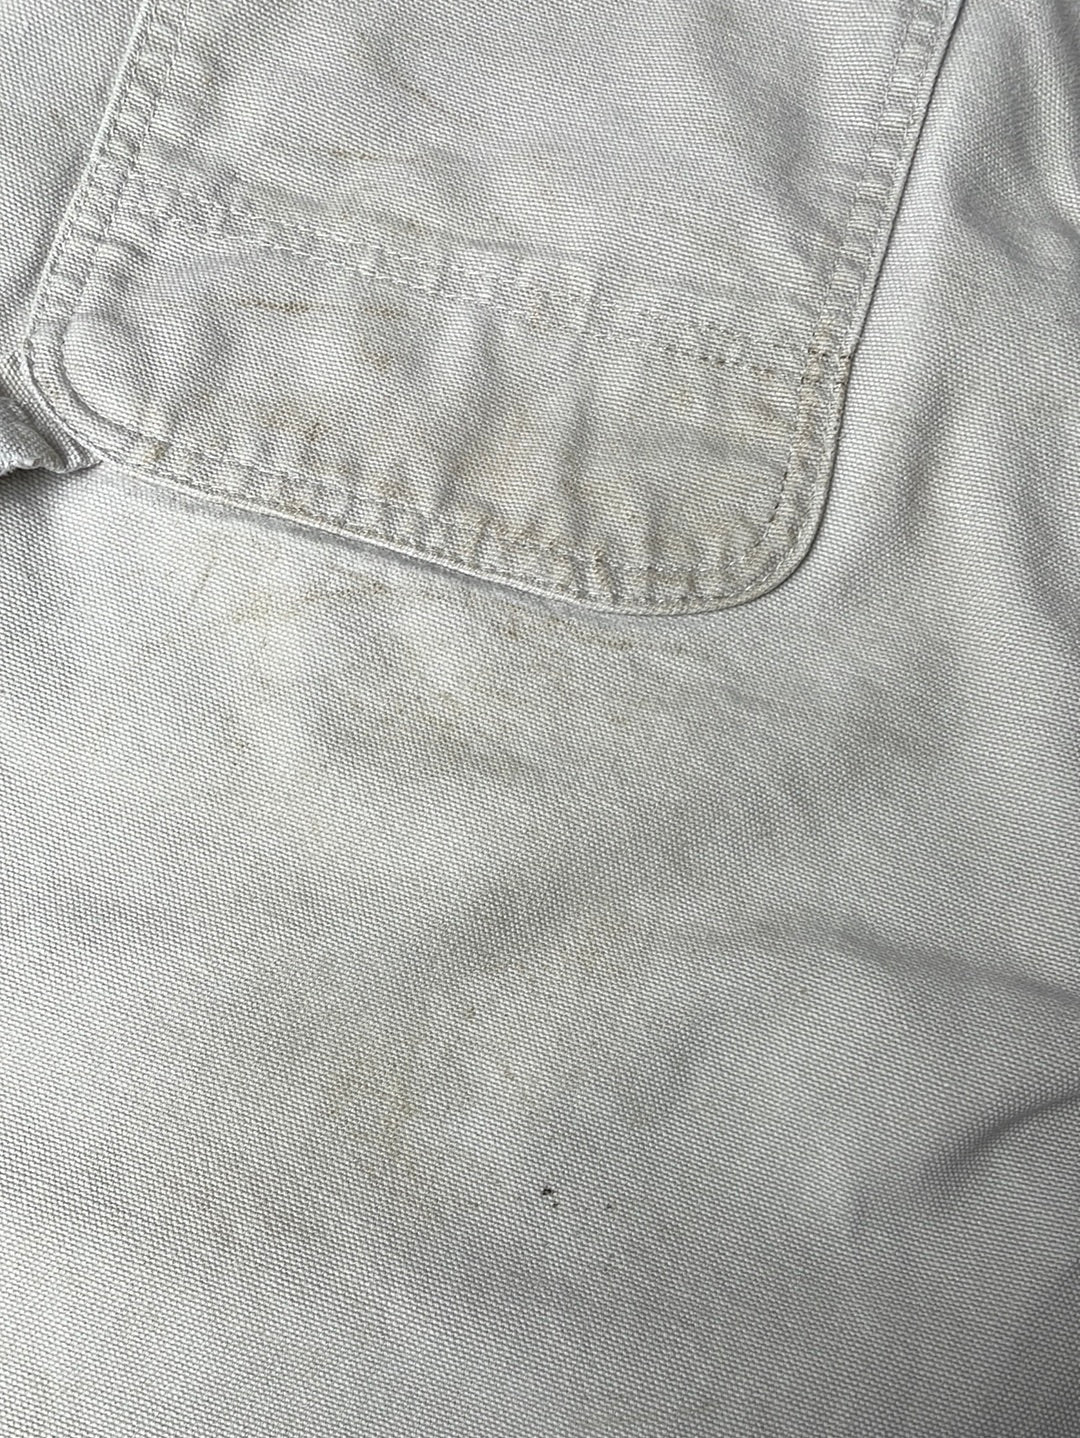 Vintage Carhartt Jeans Off White // W28 L28 - RHAGHOUSE VINTAGE